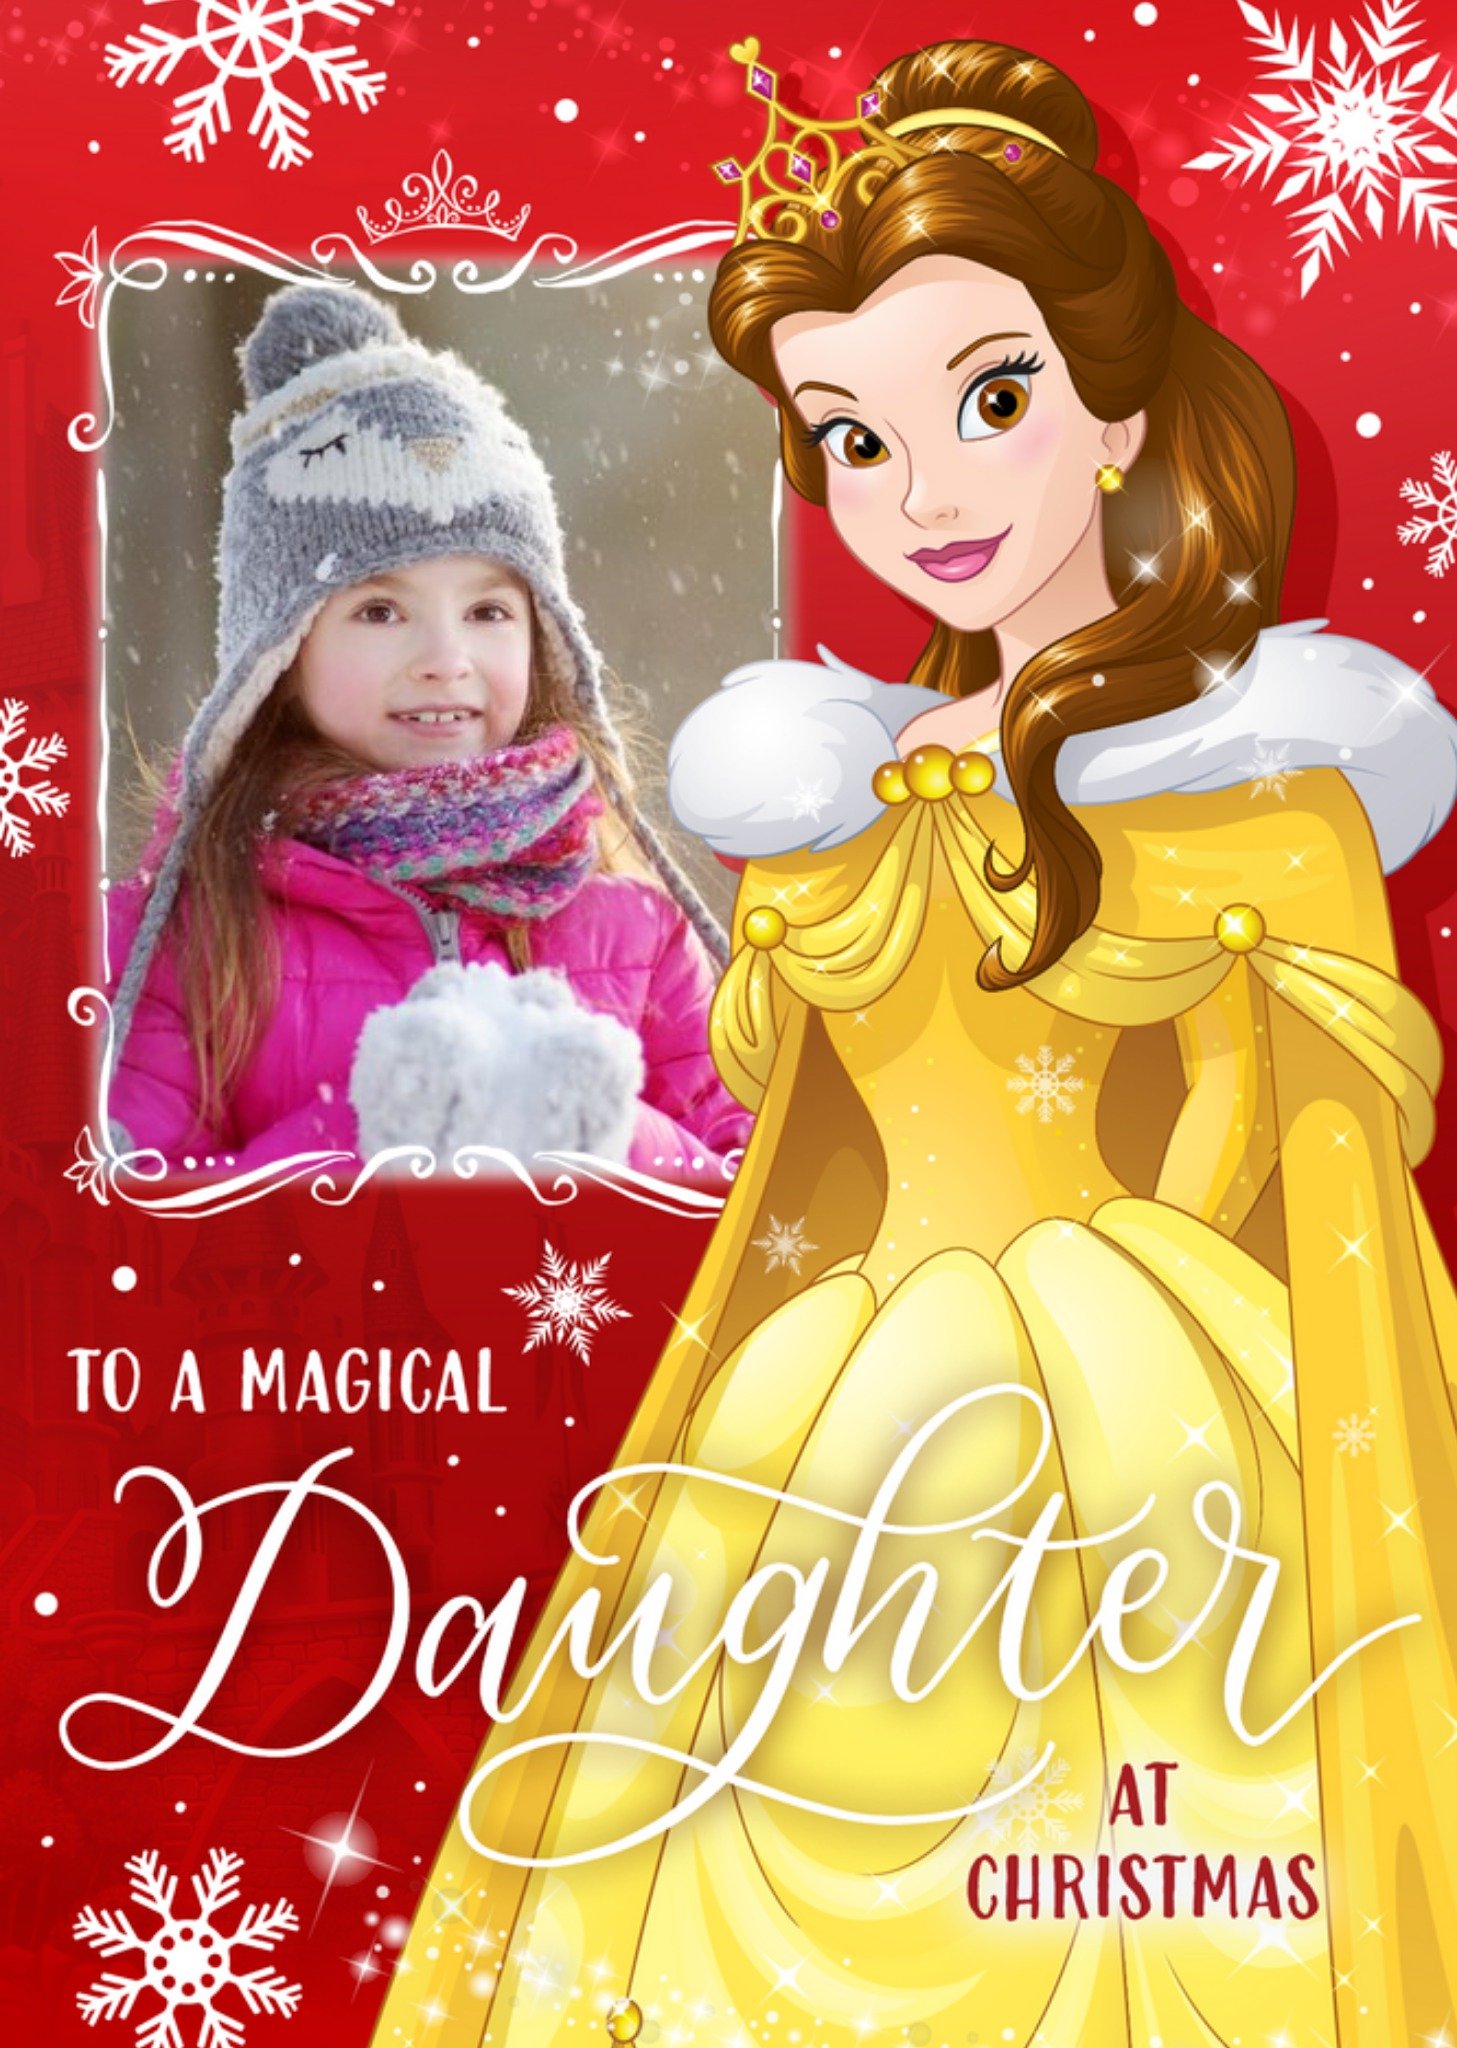 Disney Princess Beauty And The Beast Daughter Christmas Photo Upload Card Ecard